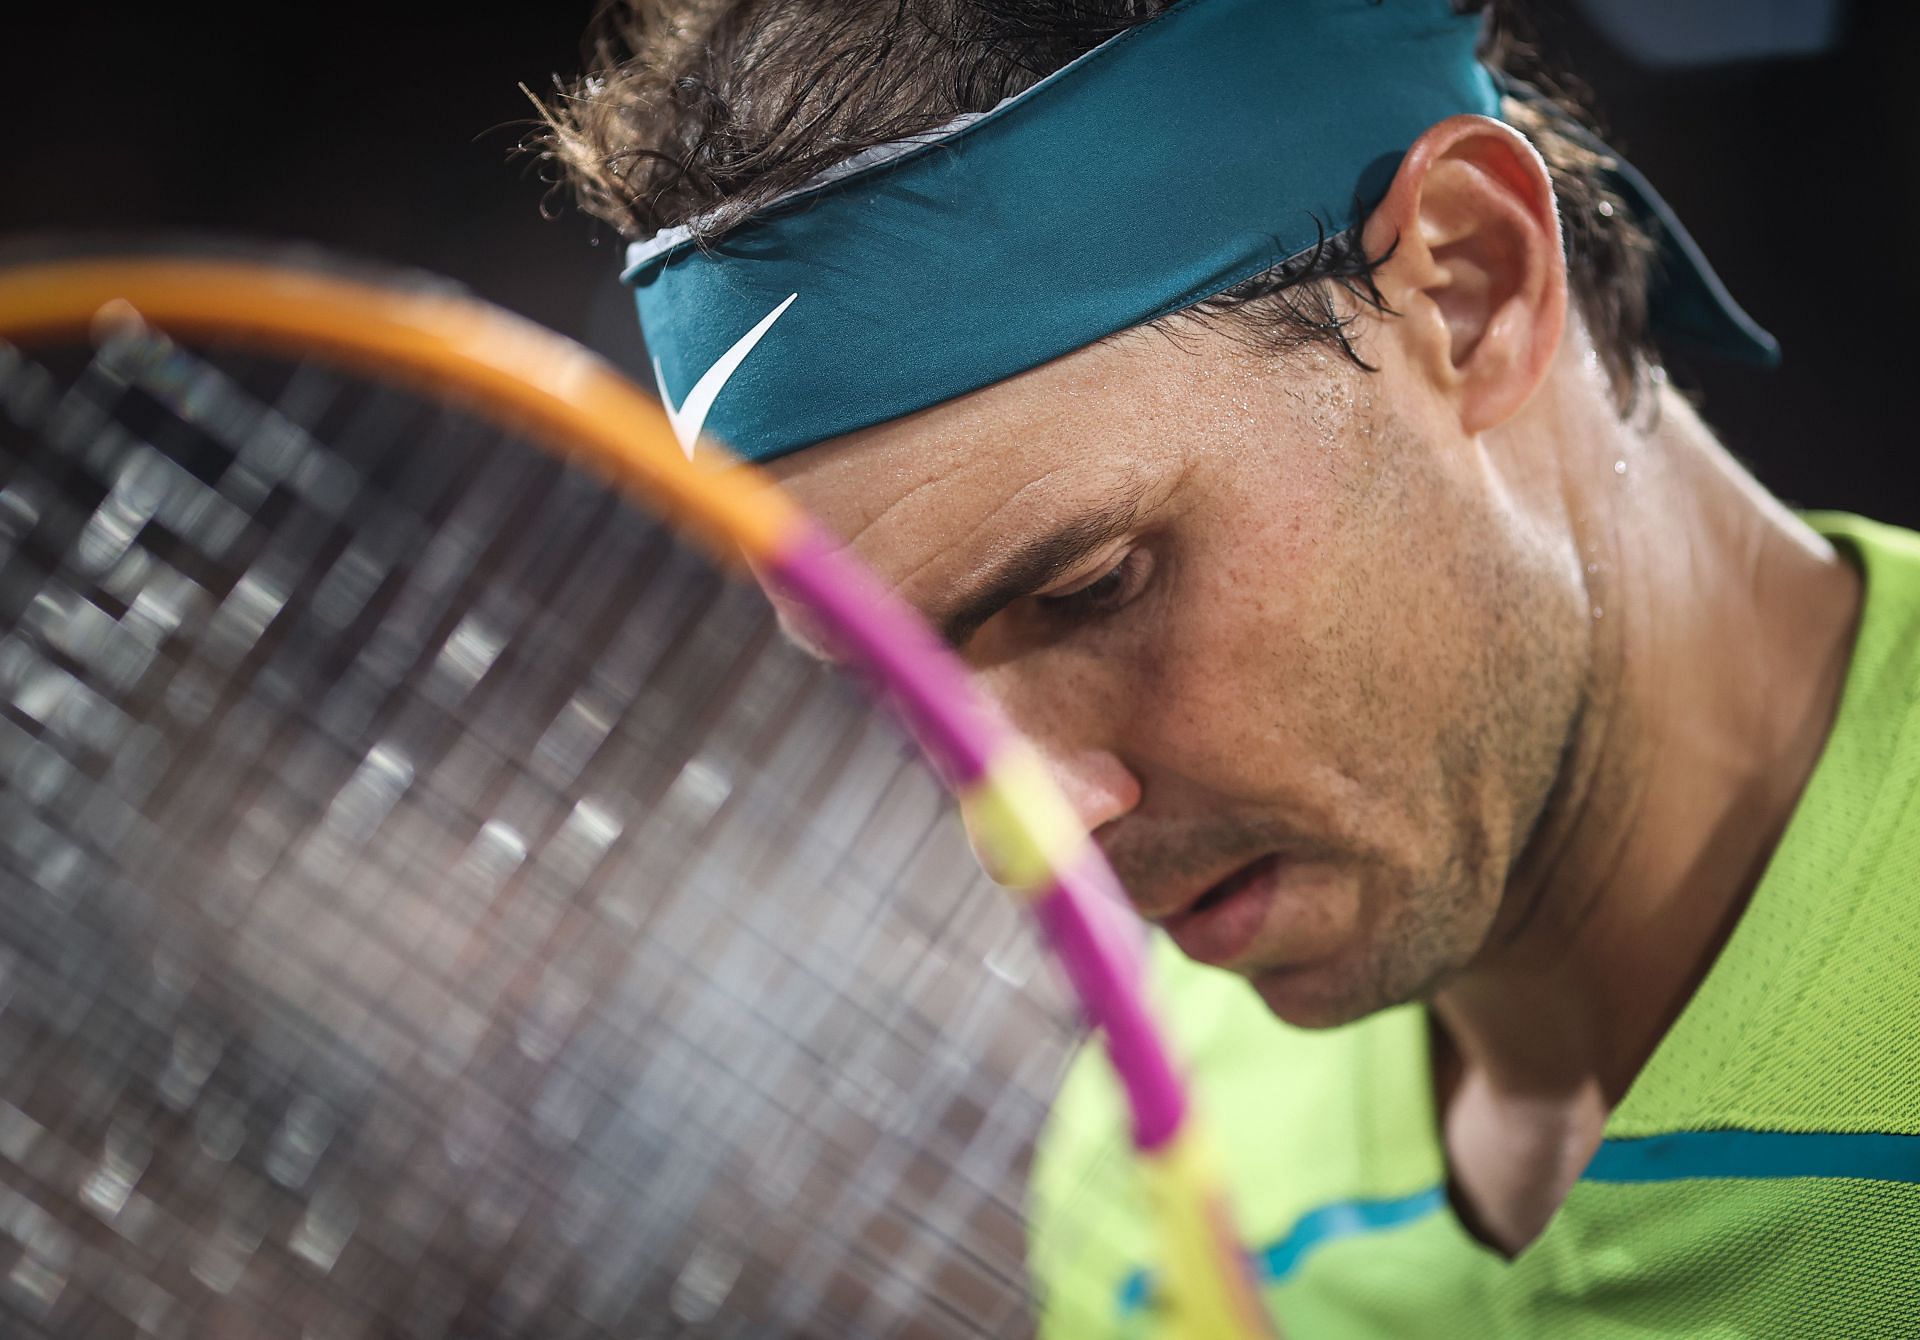 Rafael Nadal continues his dominance at Roland Garros despite his chronic foot injury.